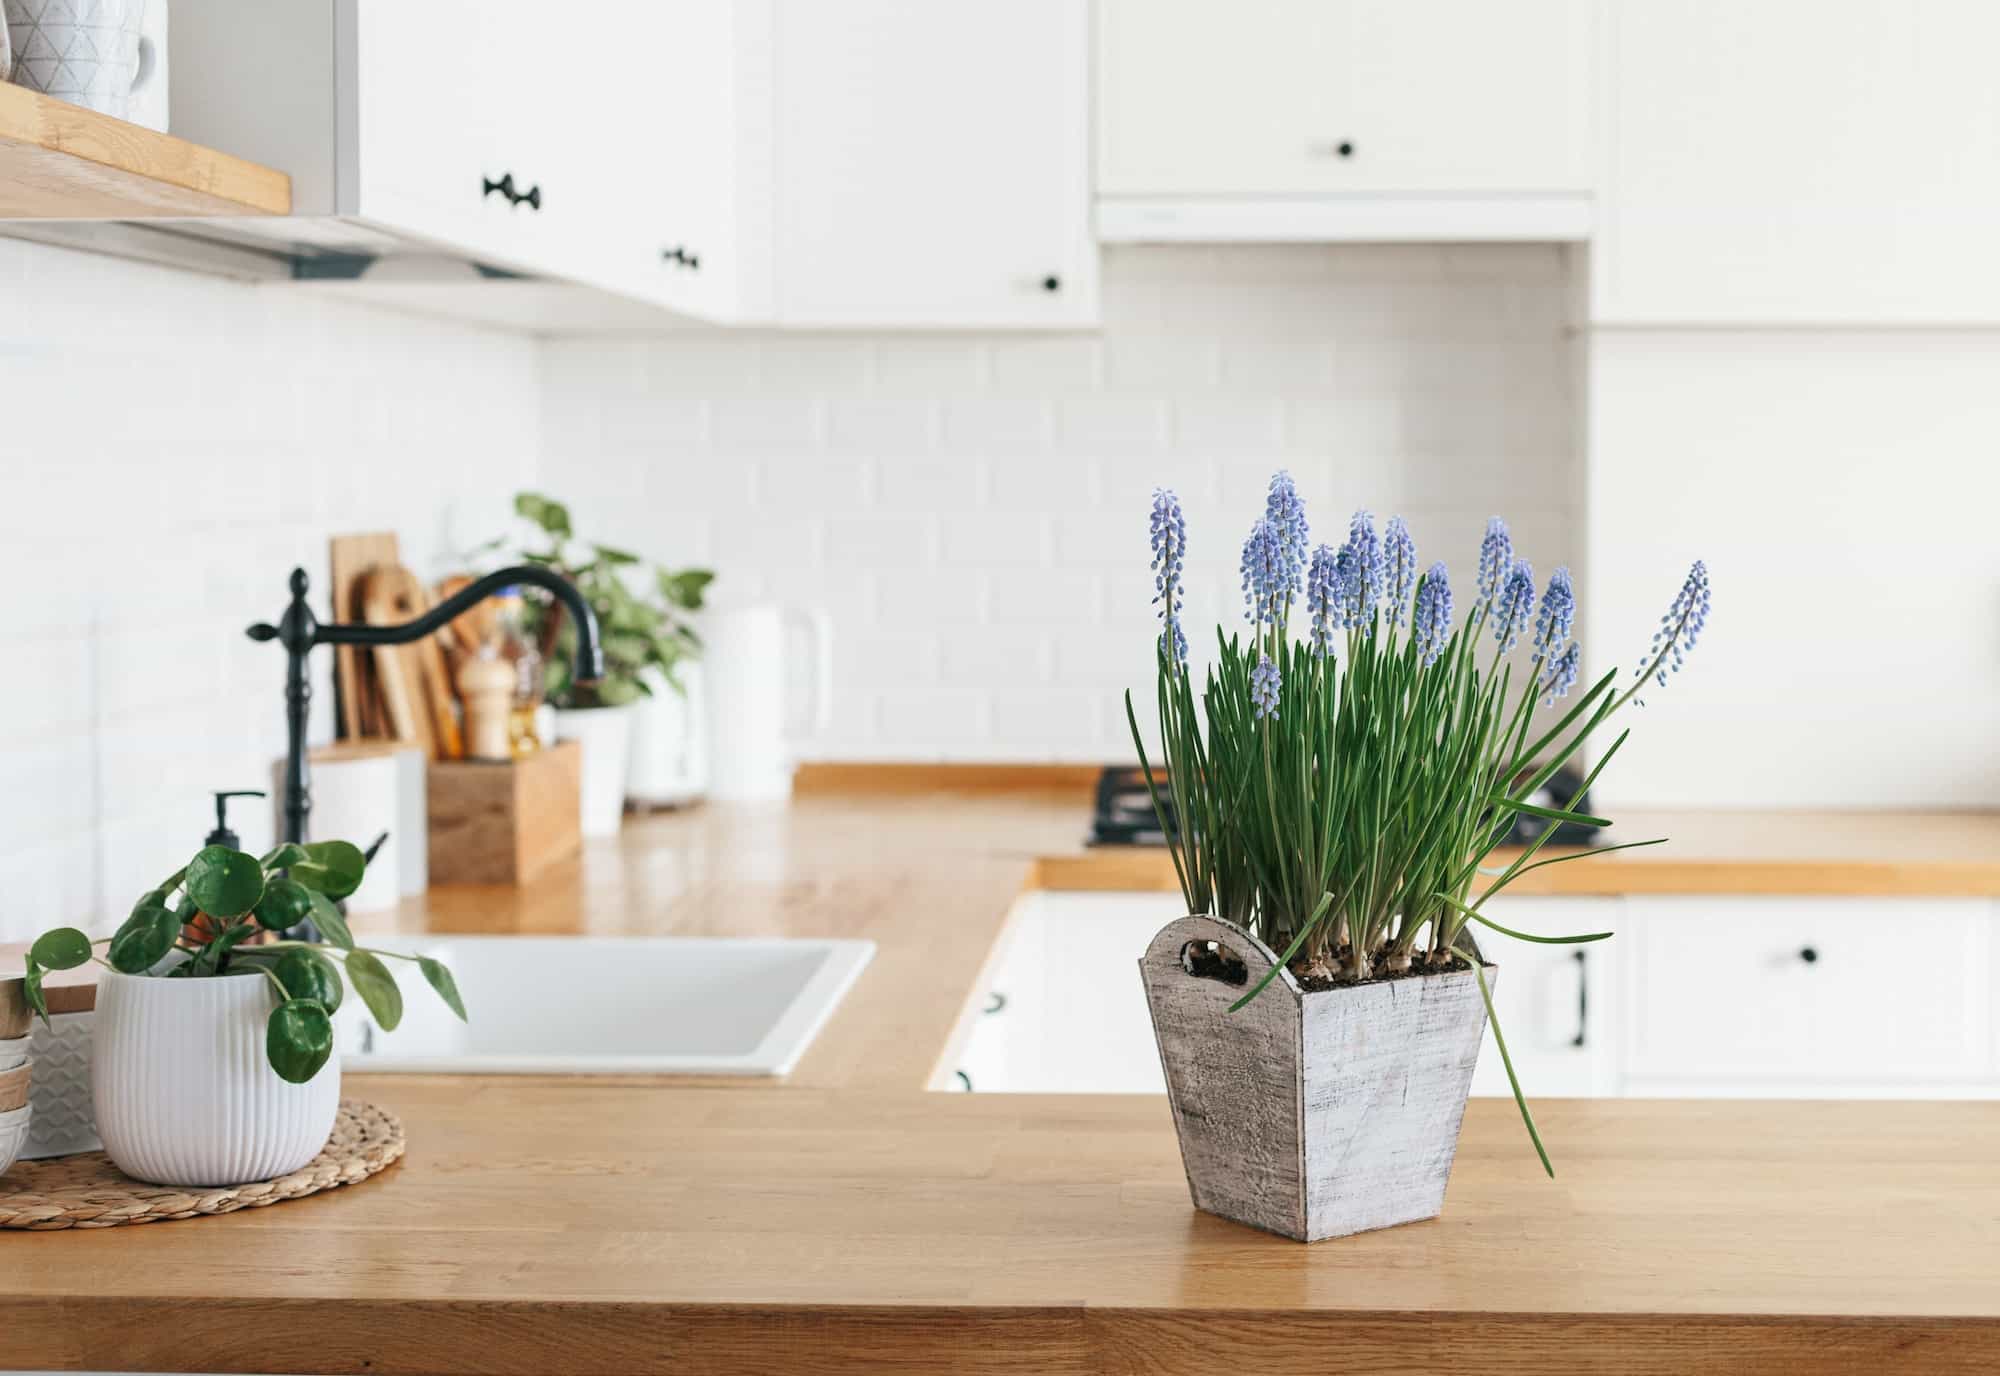 Blue muscari flower on modern kitchen scandinavian style. Spring decoration eco friendly kitchen